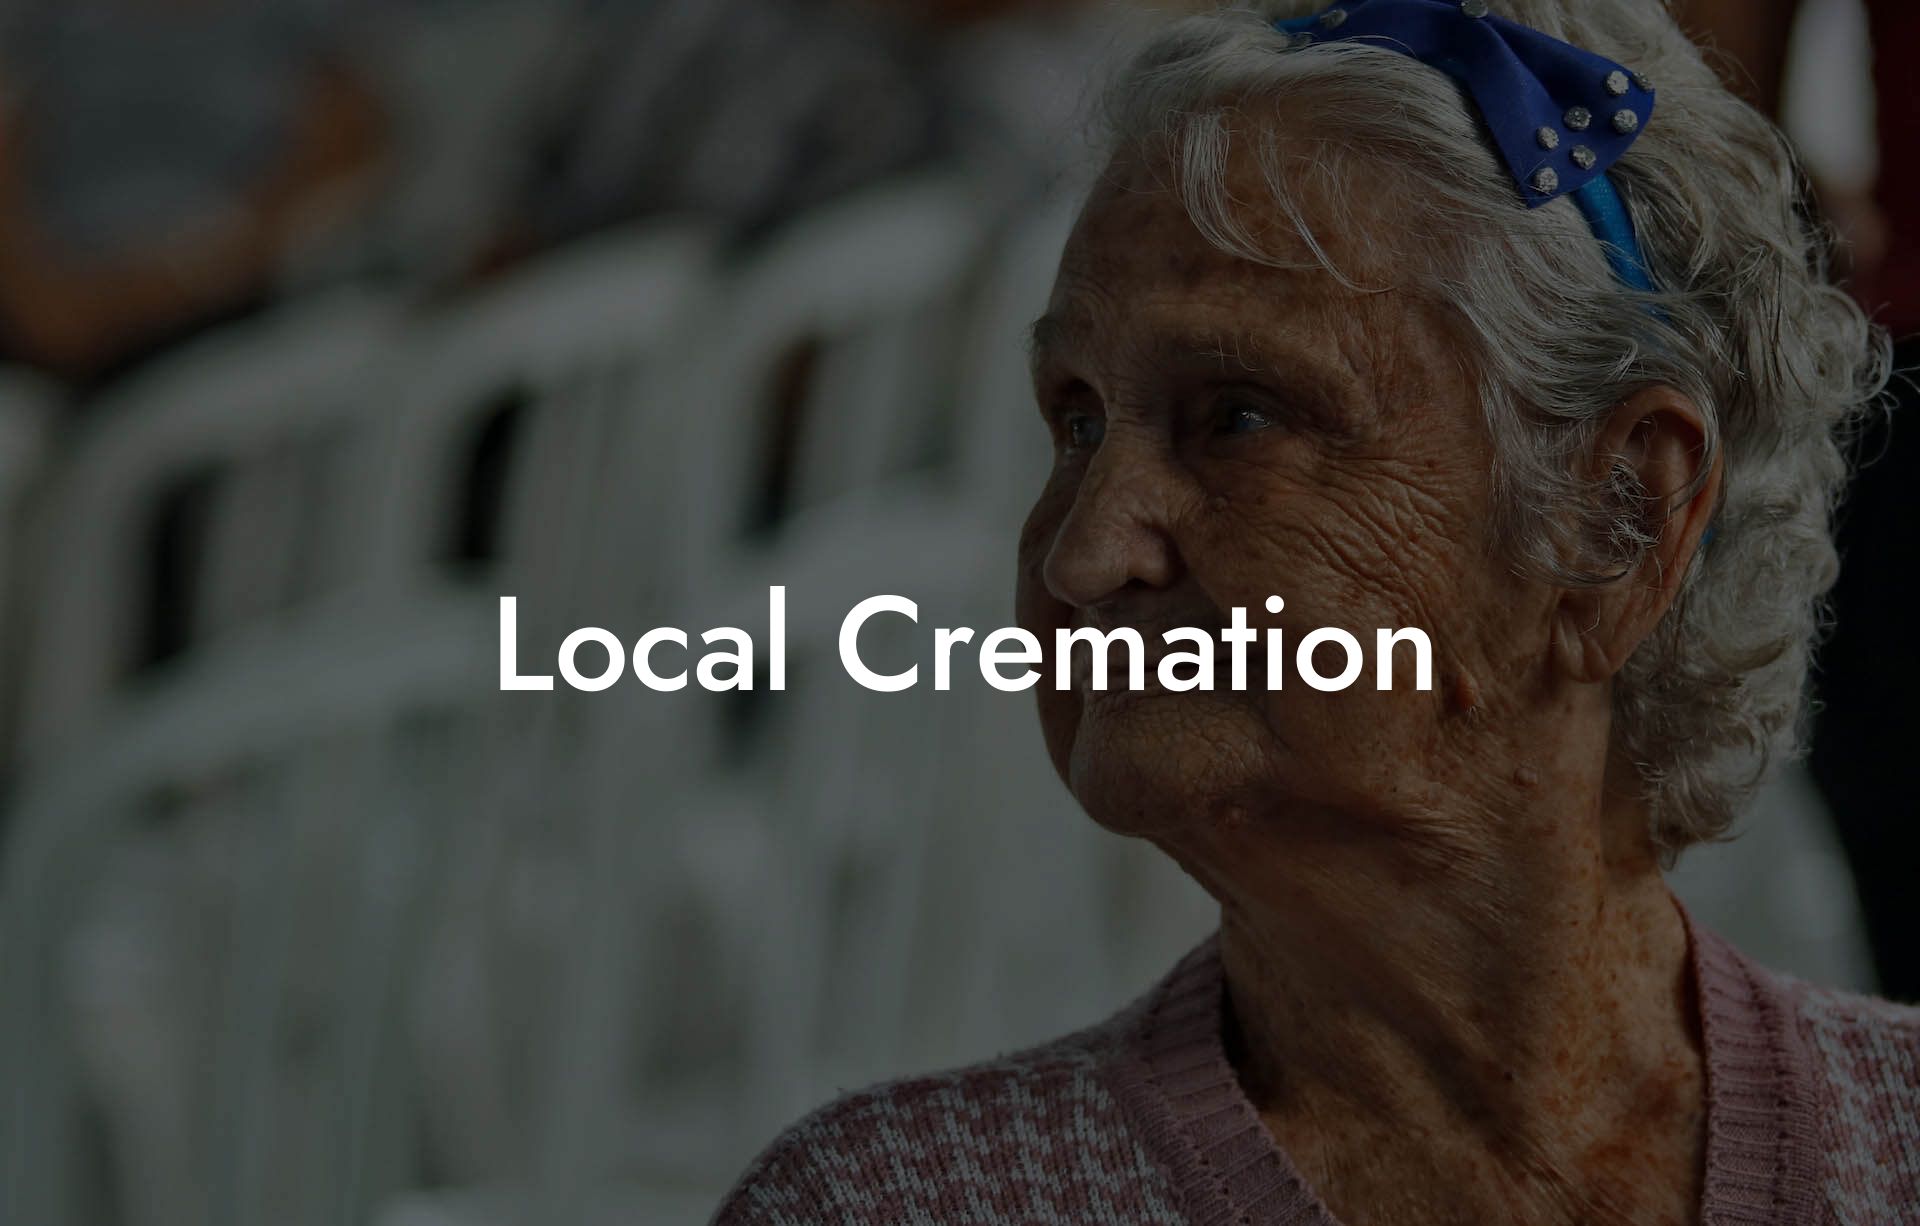 Local Cremation